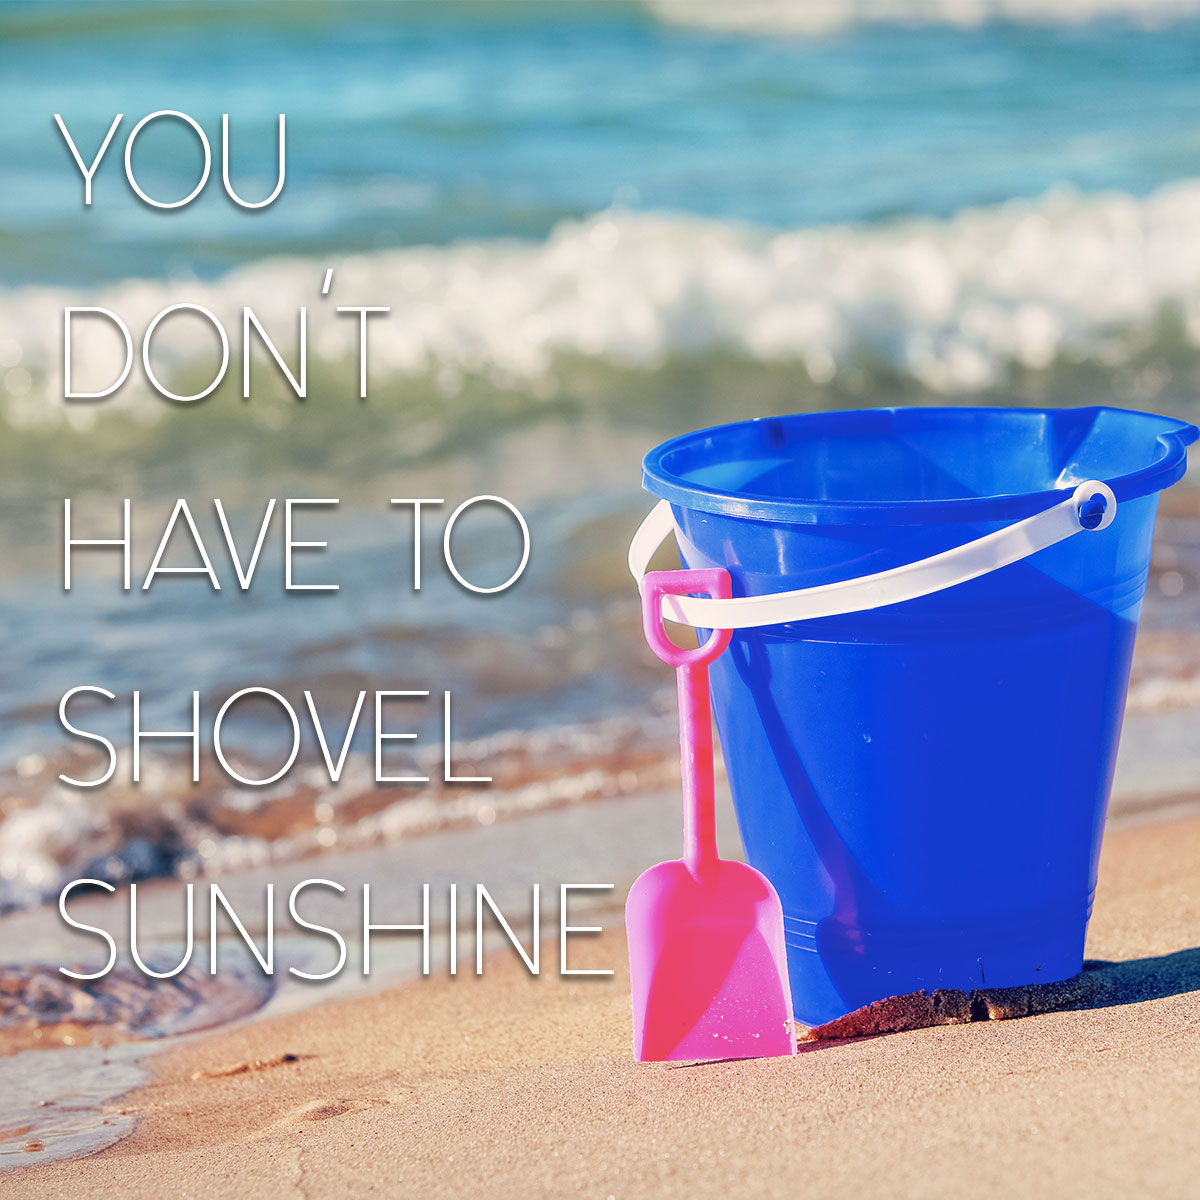 You Don't Have to Shovel Sunshine